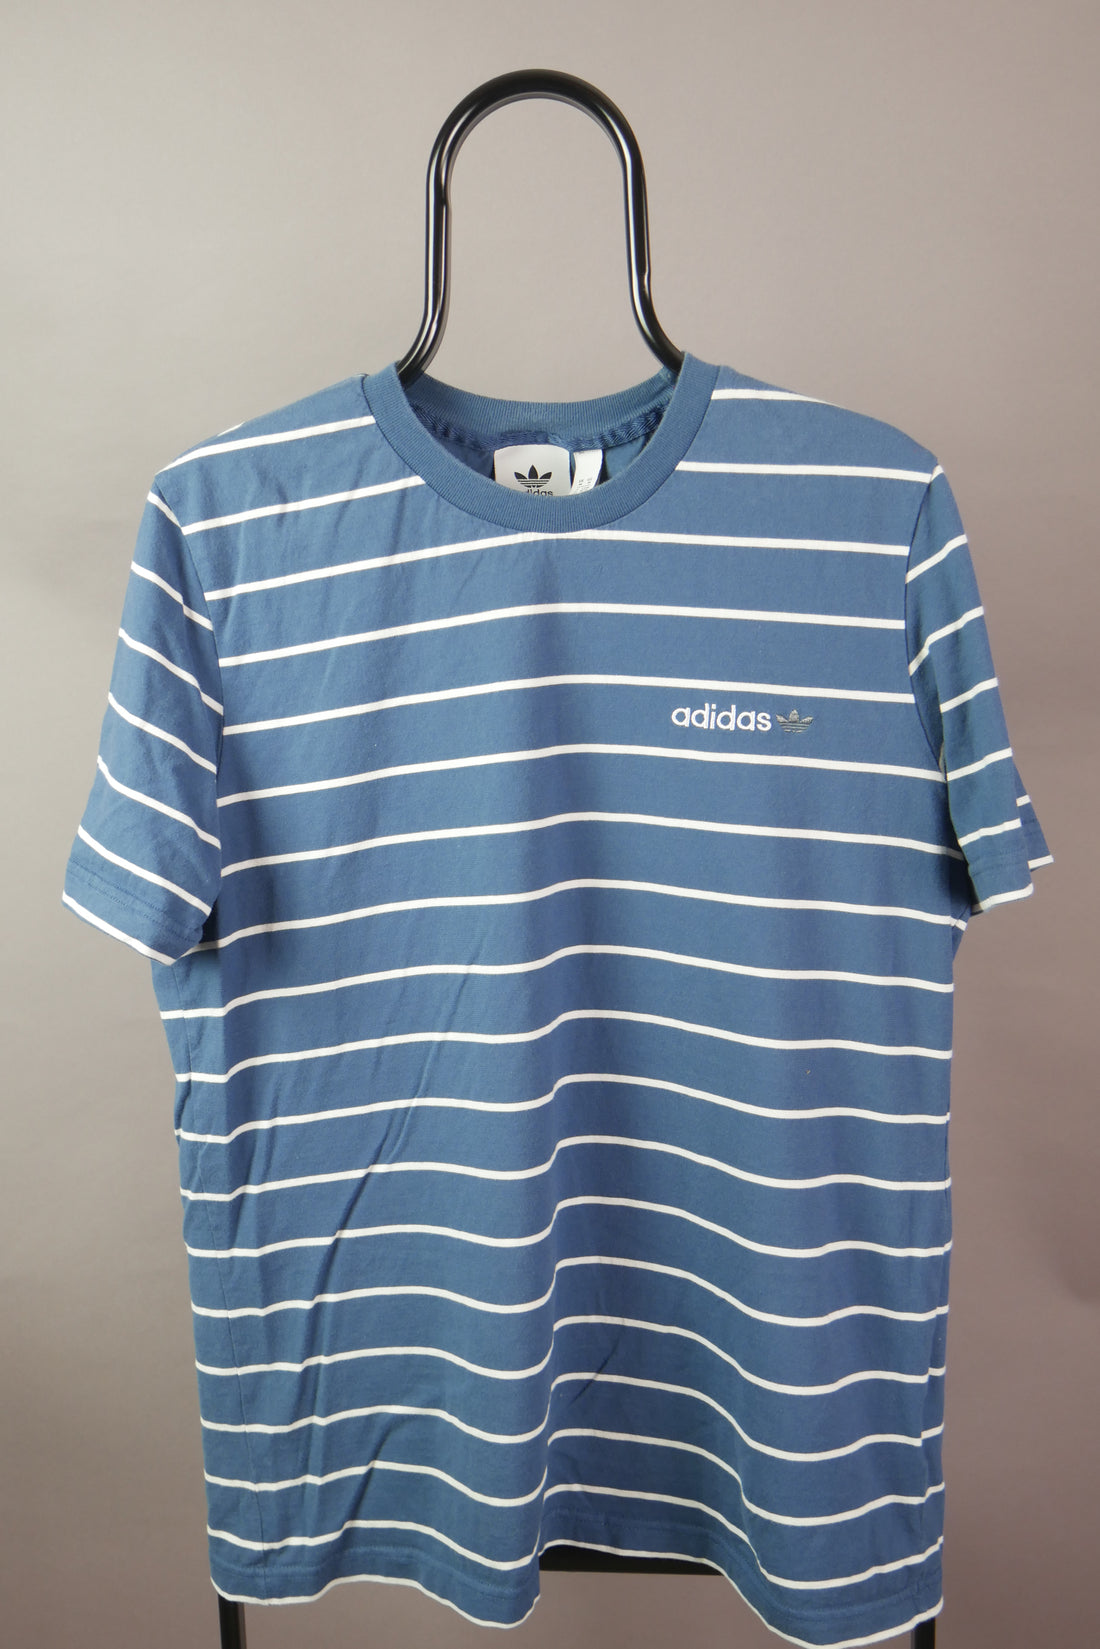 The Striped Adidas T-Shirt (M)